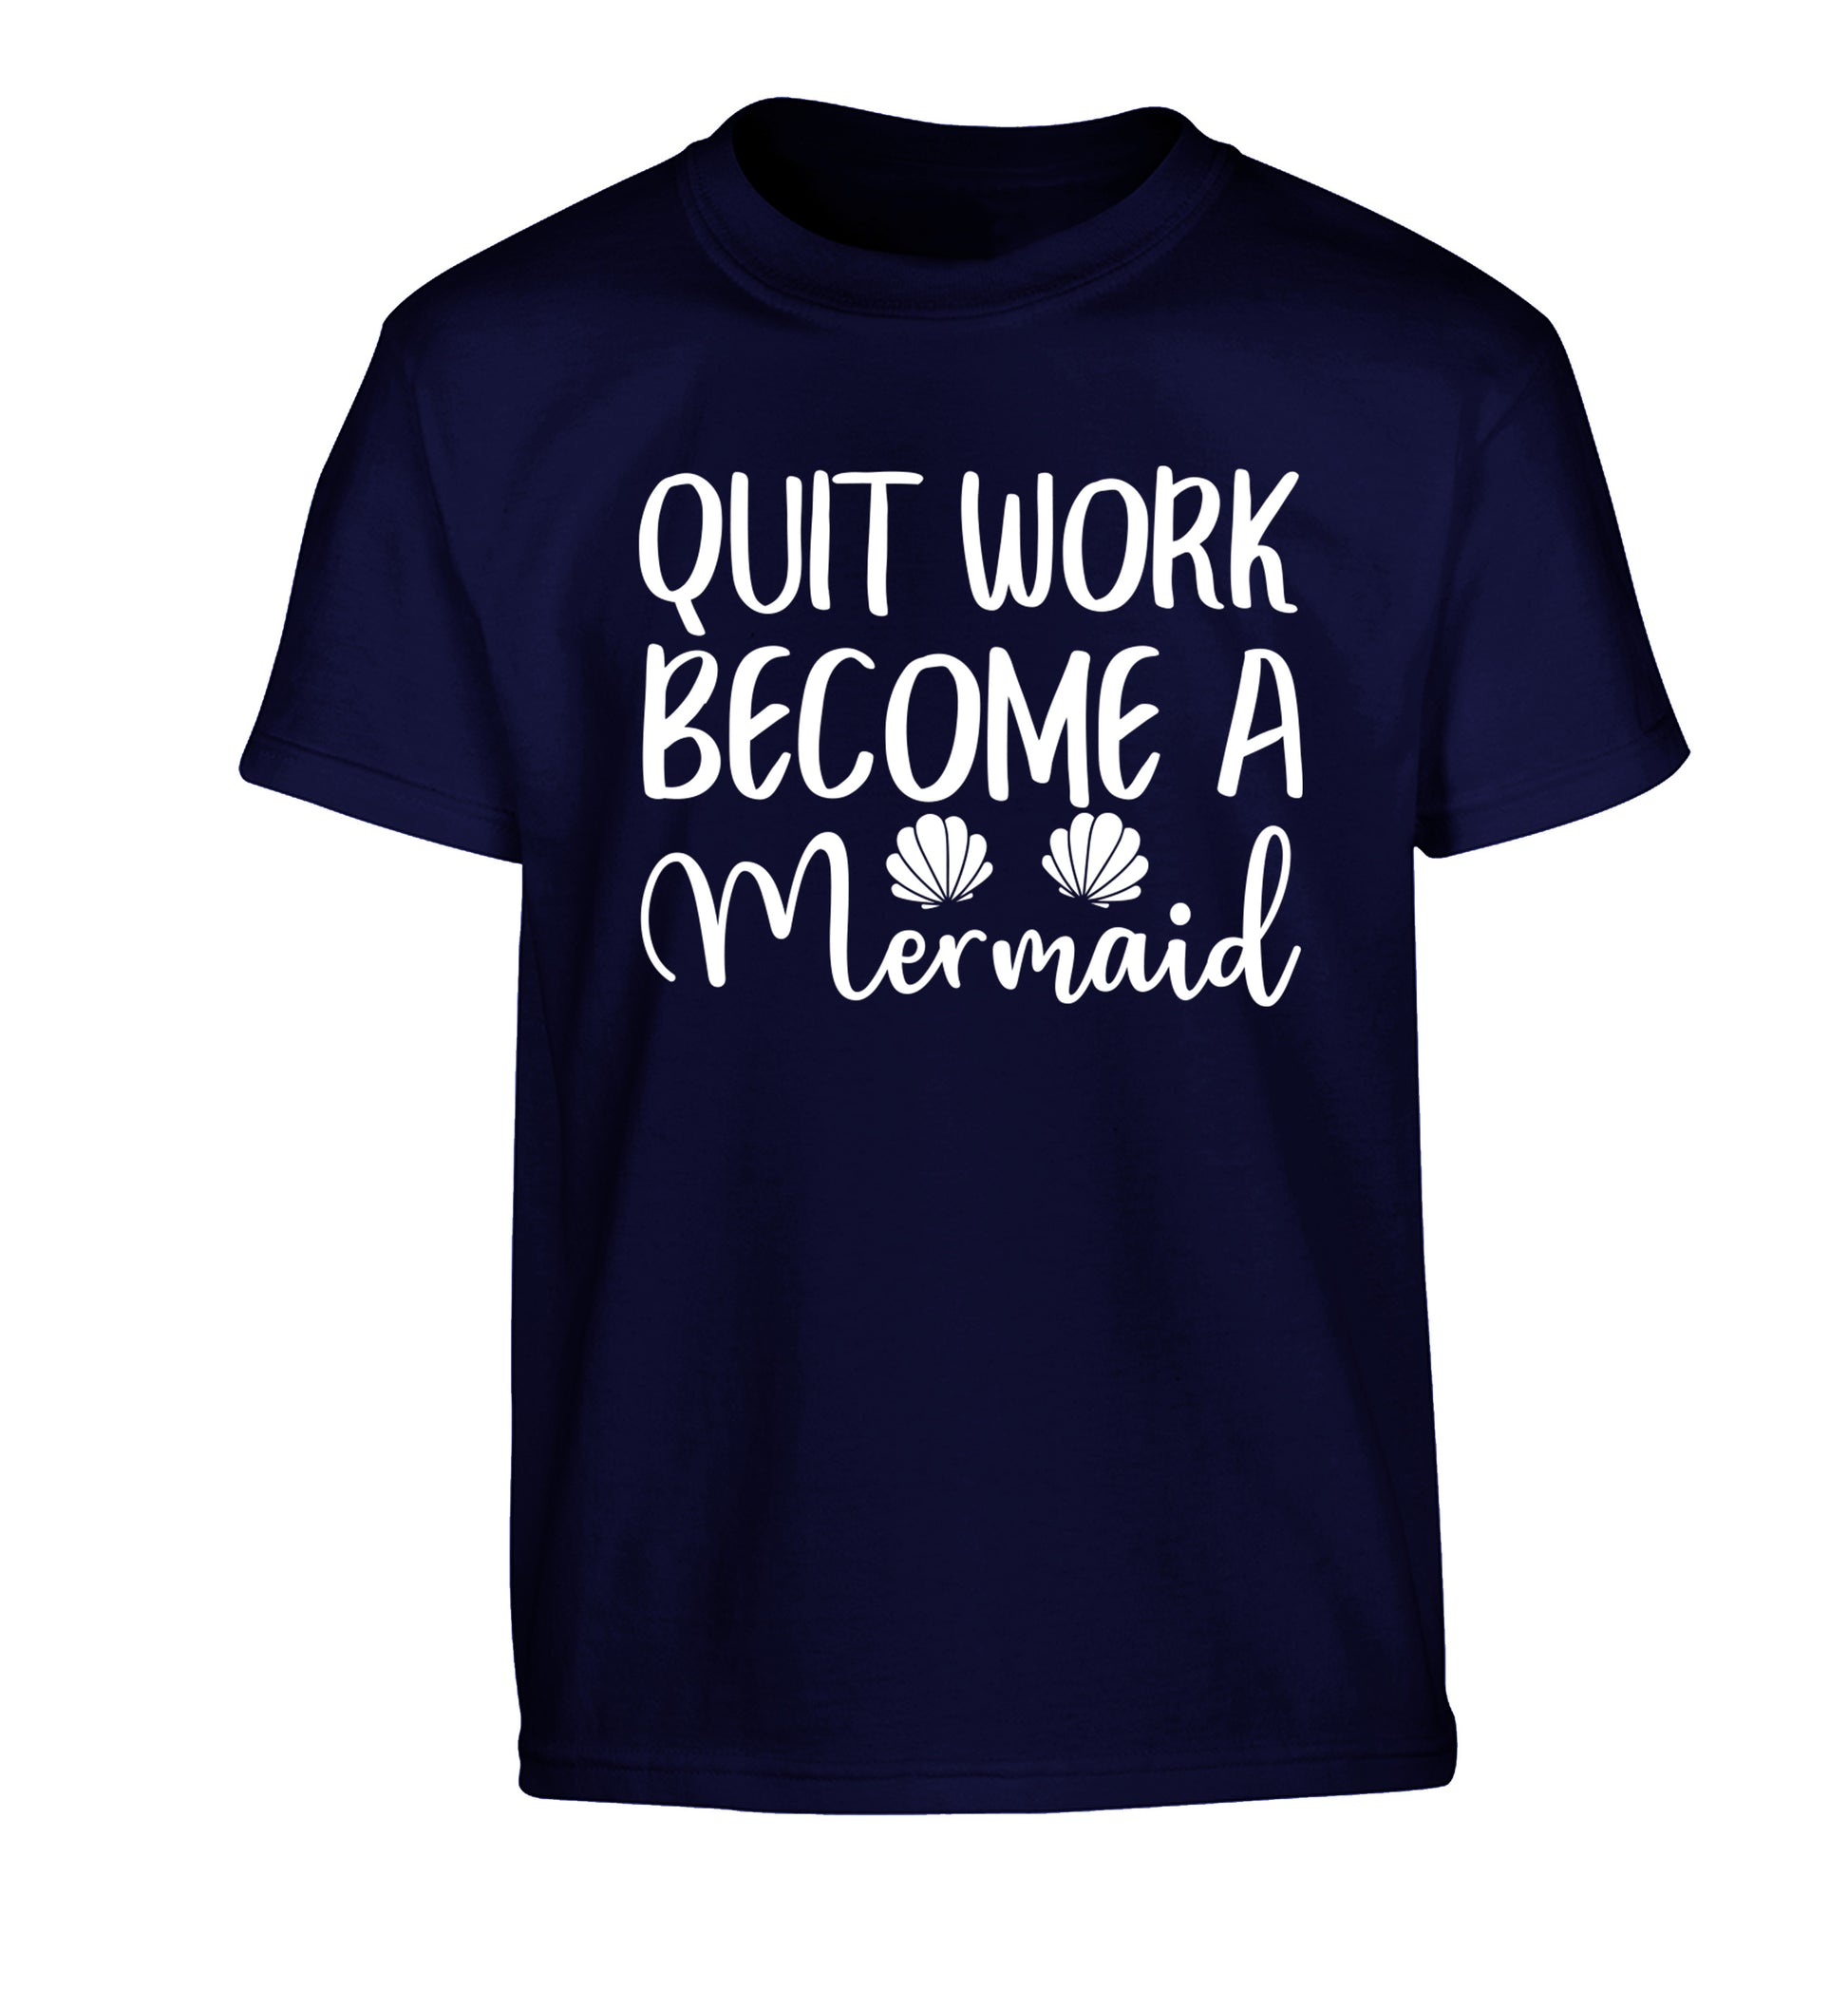 Quit work become a mermaid Children's navy Tshirt 12-13 Years